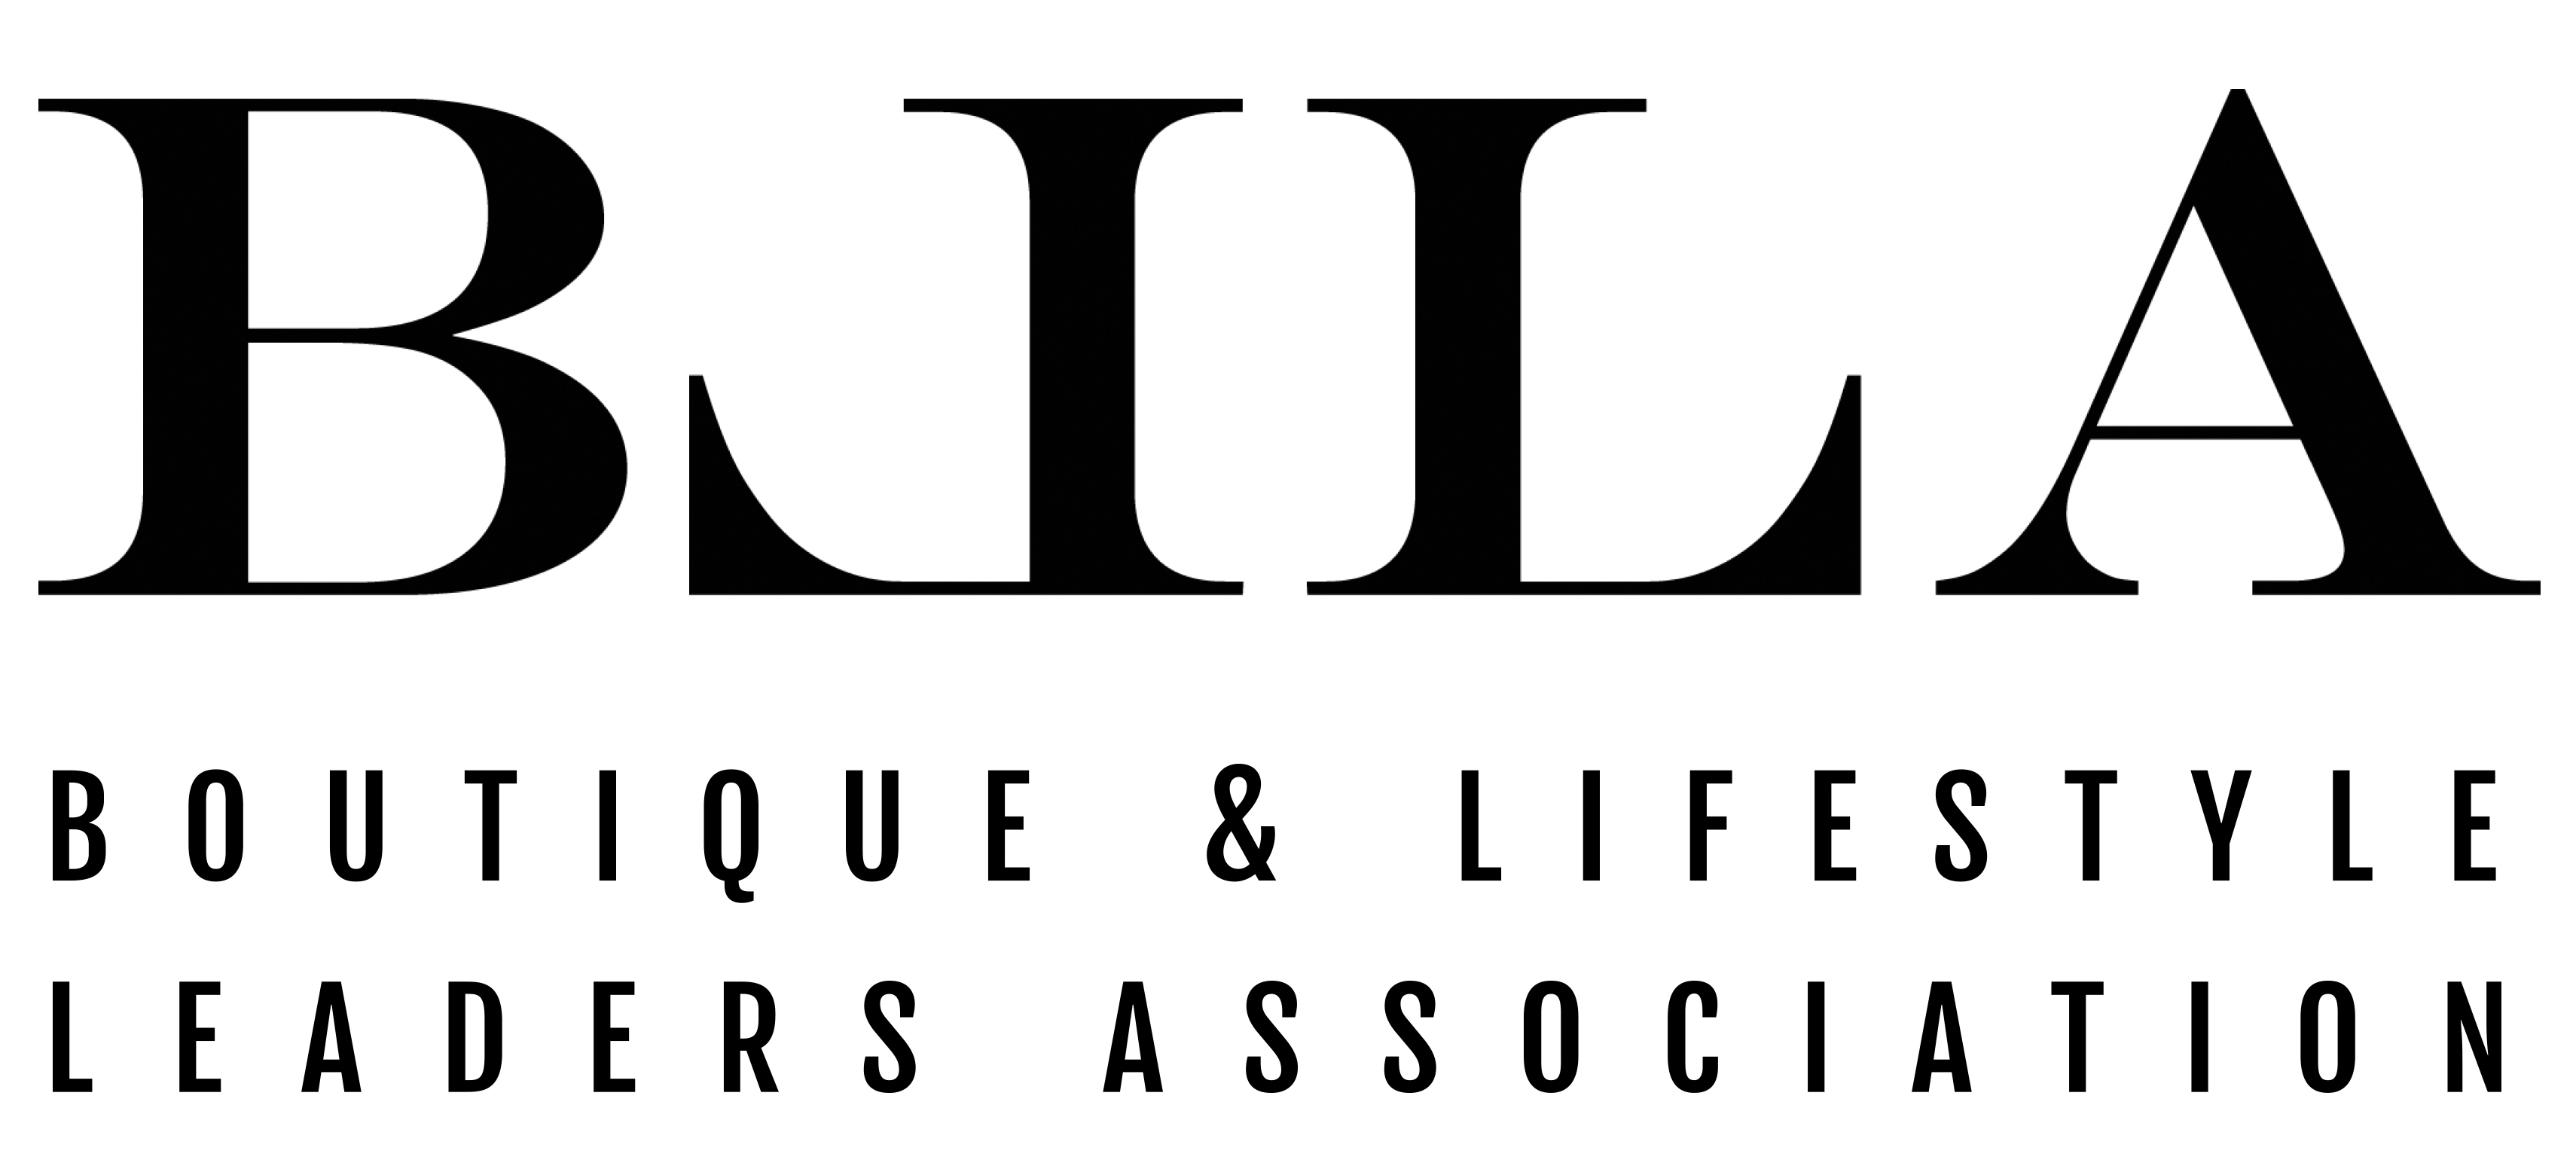 BLLA Leaders Association